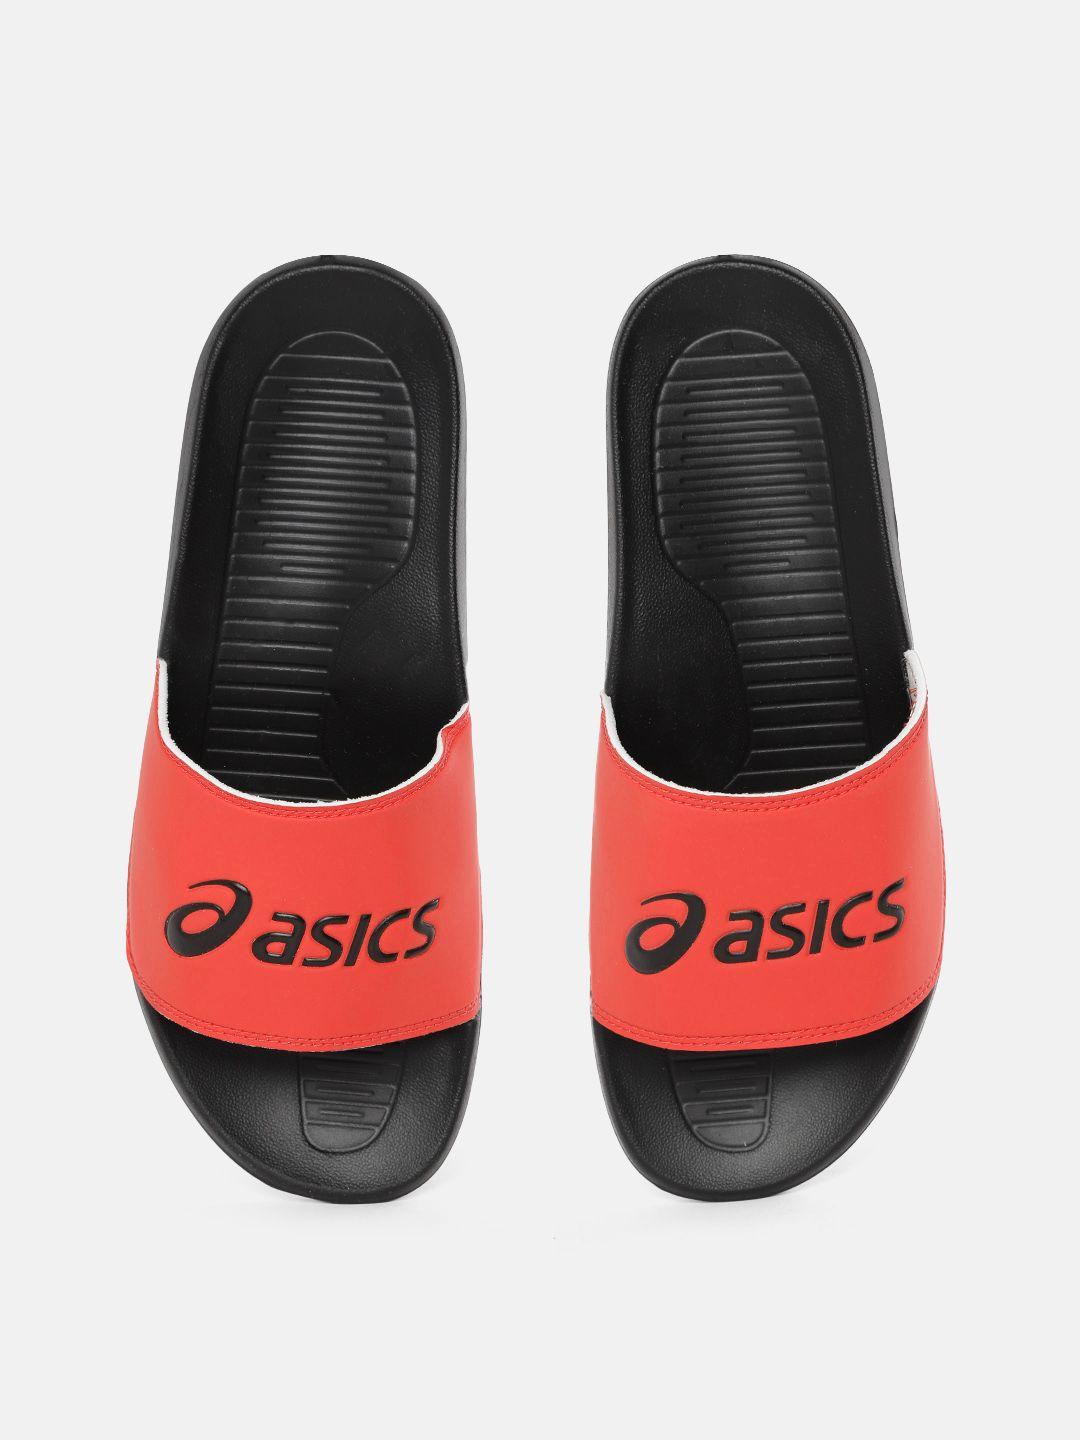 asics unisex coral orange & black brand logo print sliders